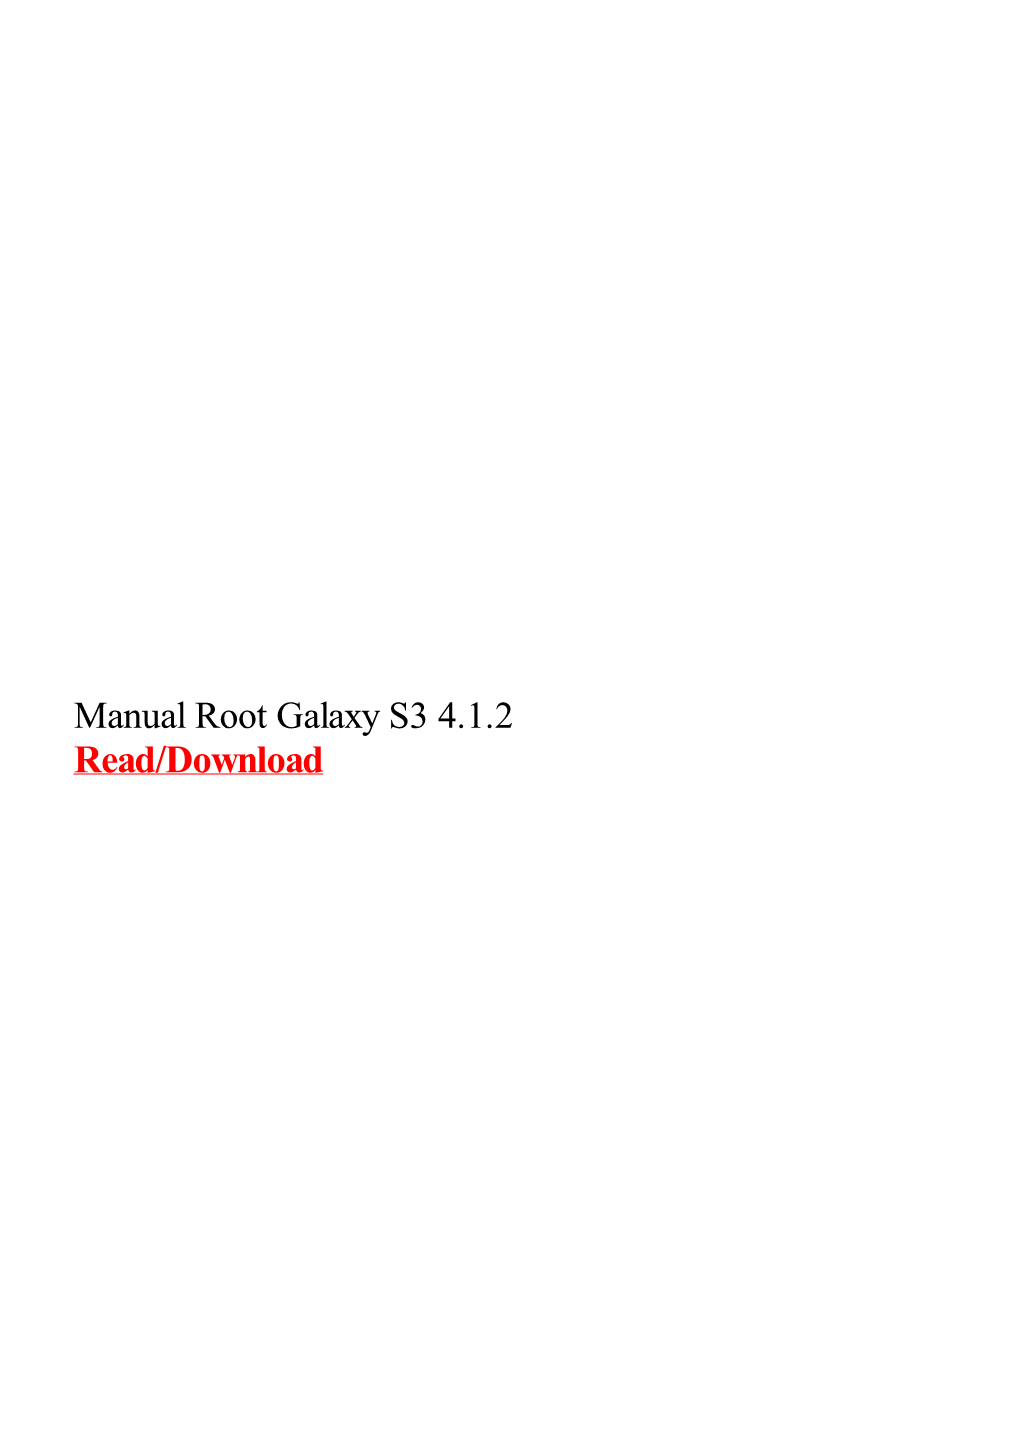 Manual Root Galaxy S3 4.1.2.Pdf